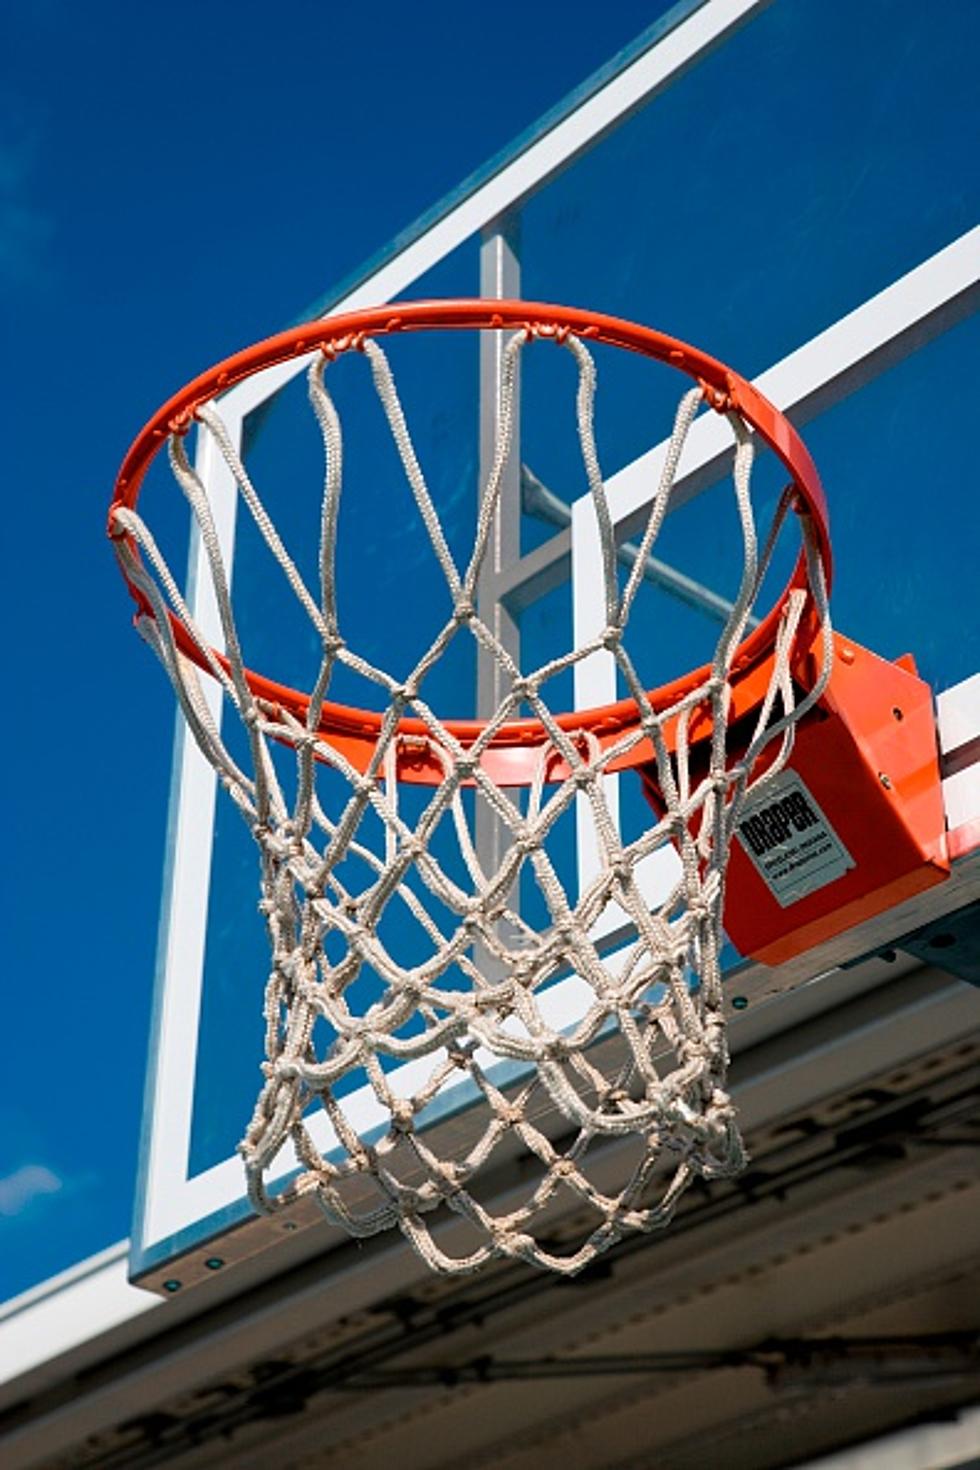 Grand Rapids Police Give a Neighborhood a Basketball Hoop